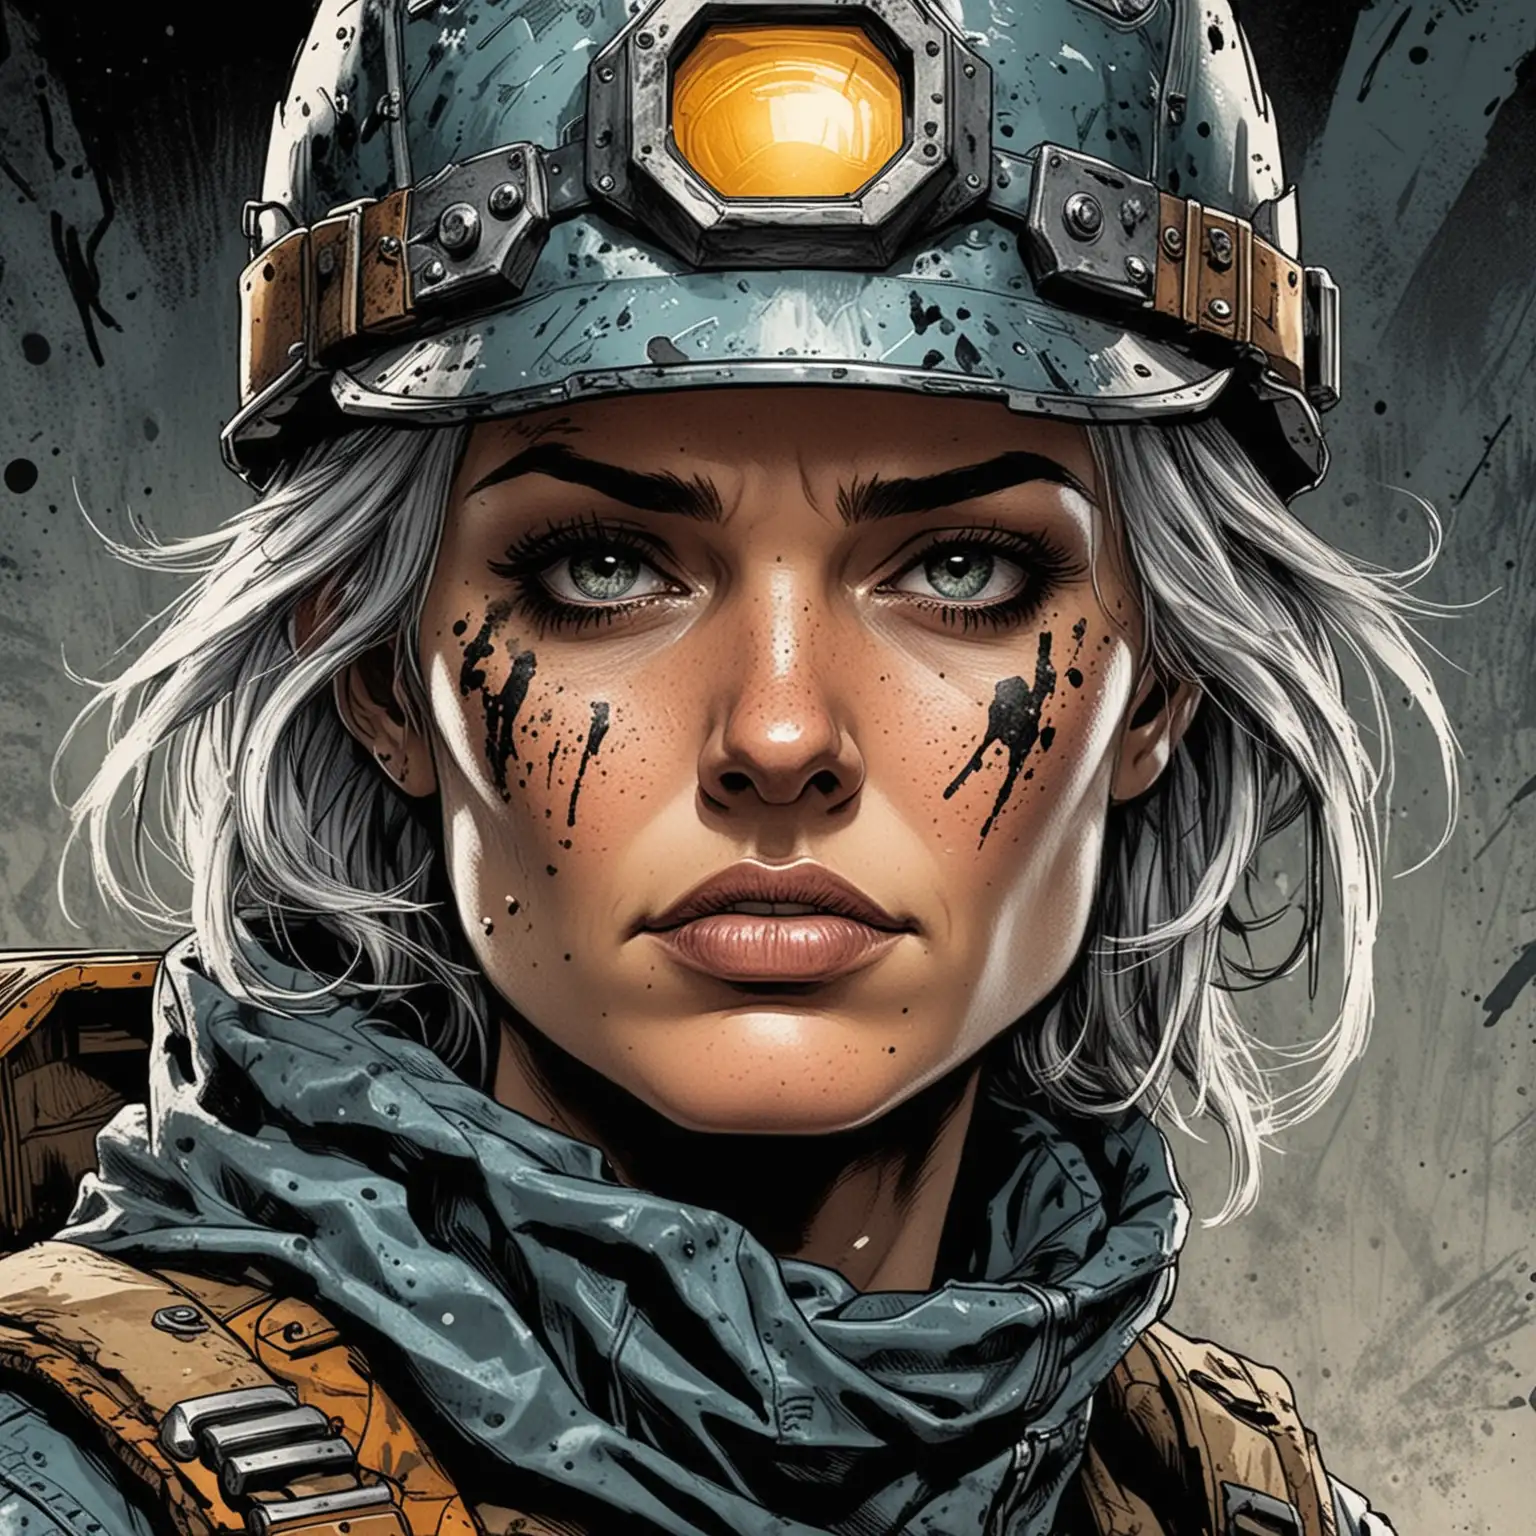 Grizzled Female Miner in Futuristic Protective Gear Comic Book Style Portrait